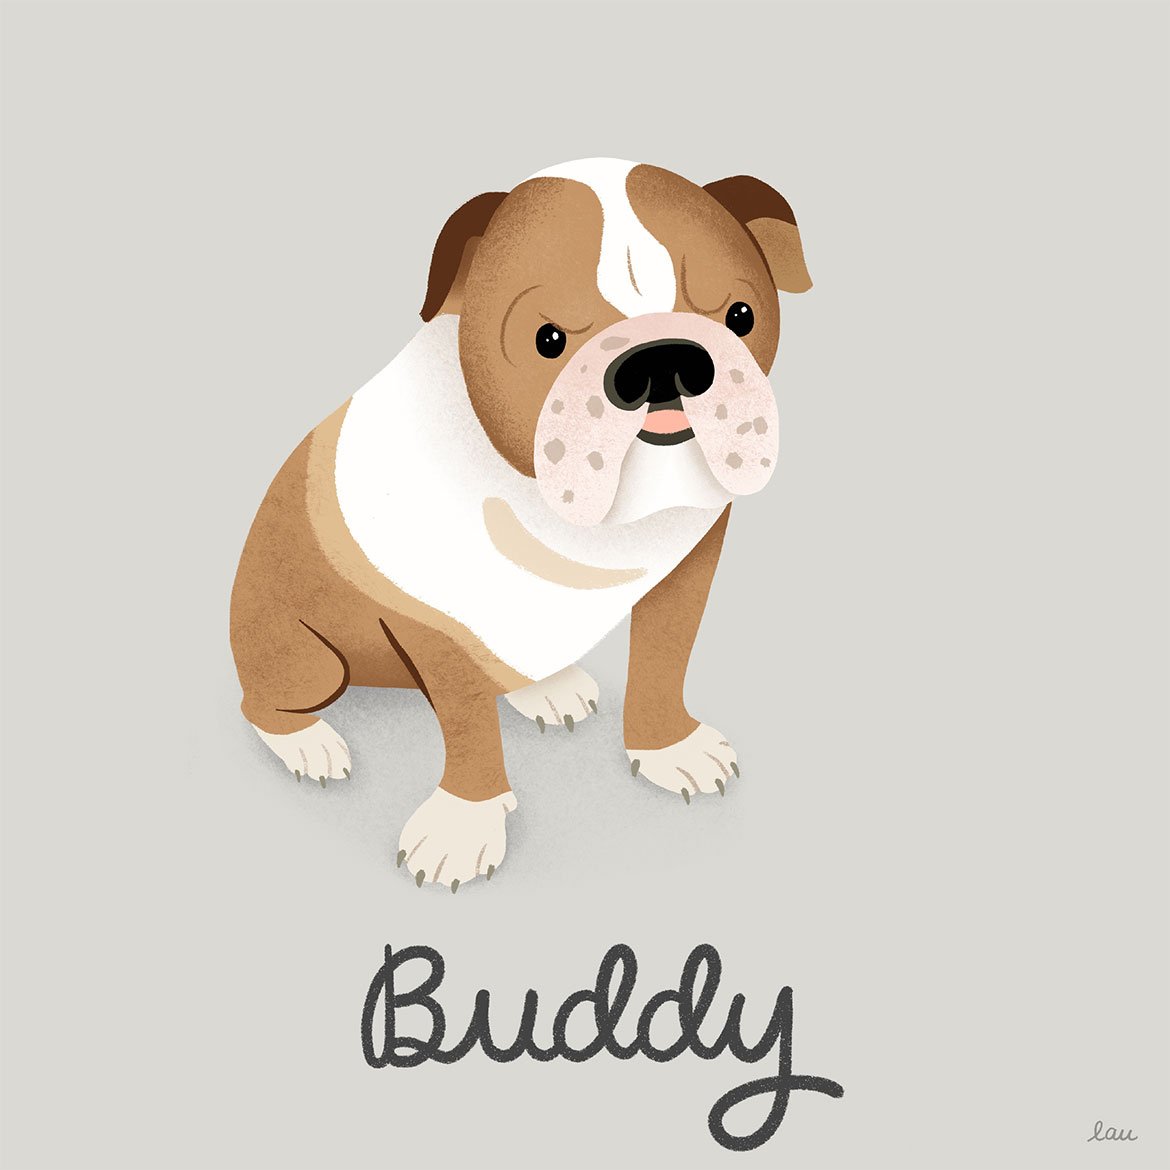 laudogs-buddy